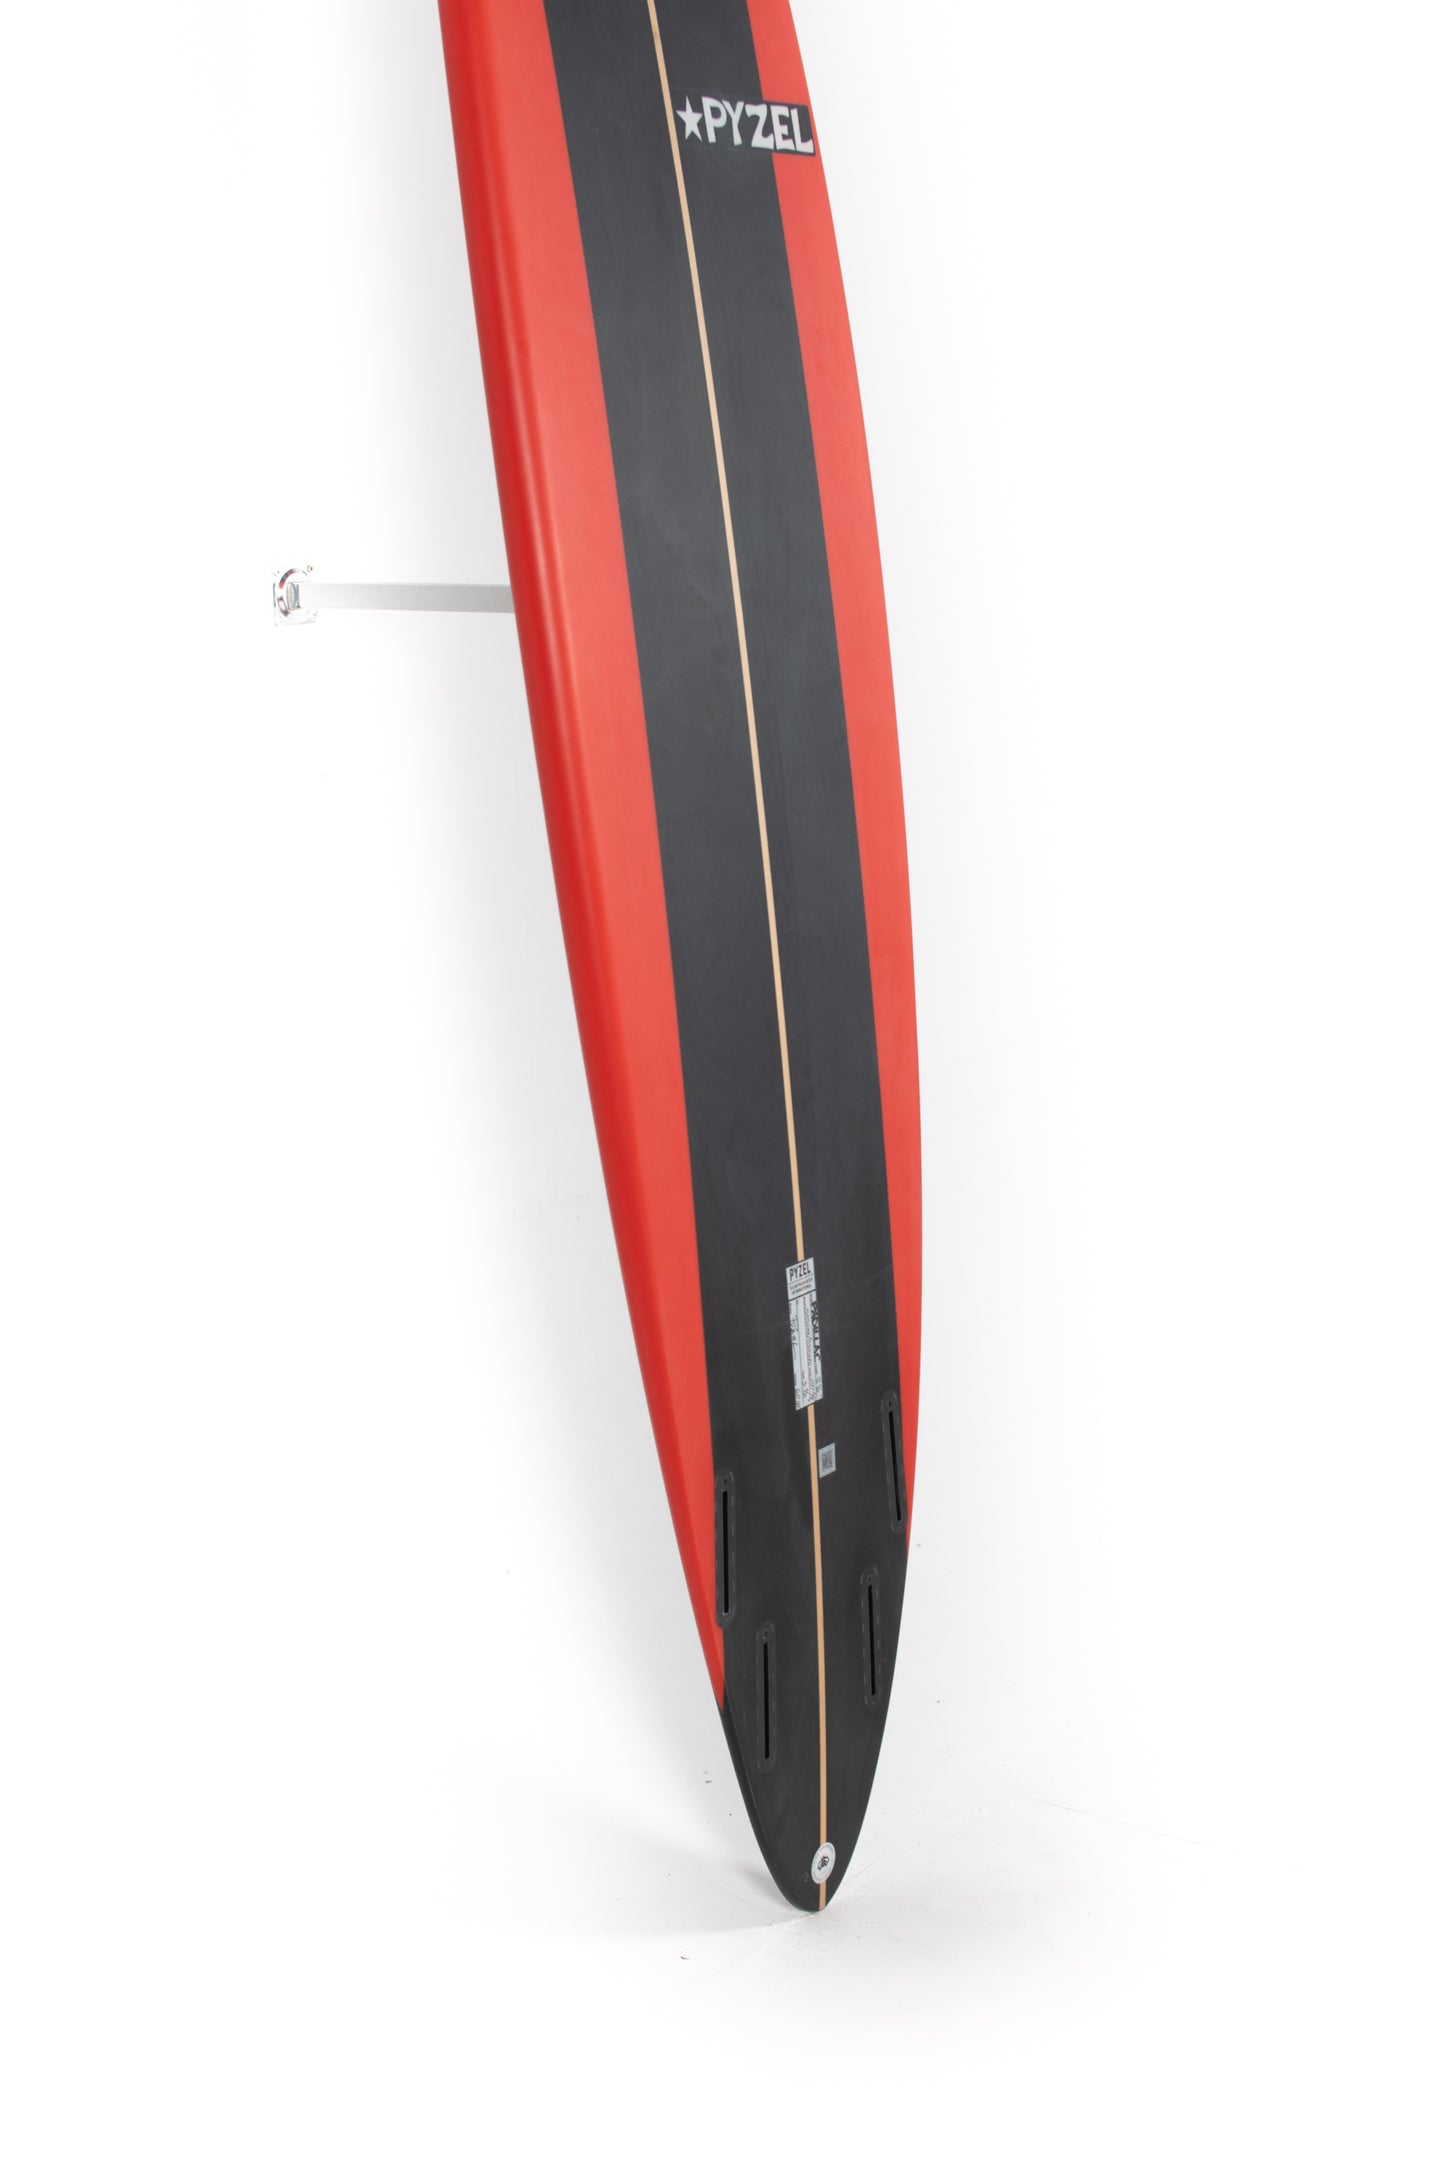 
                  
                    Pukas Surf Shop - Pyzel Surfboards - PADILLAC - 8'6" x 20 3/4 x 3 1/2 - 62,8L - Ref: 555315
                  
                